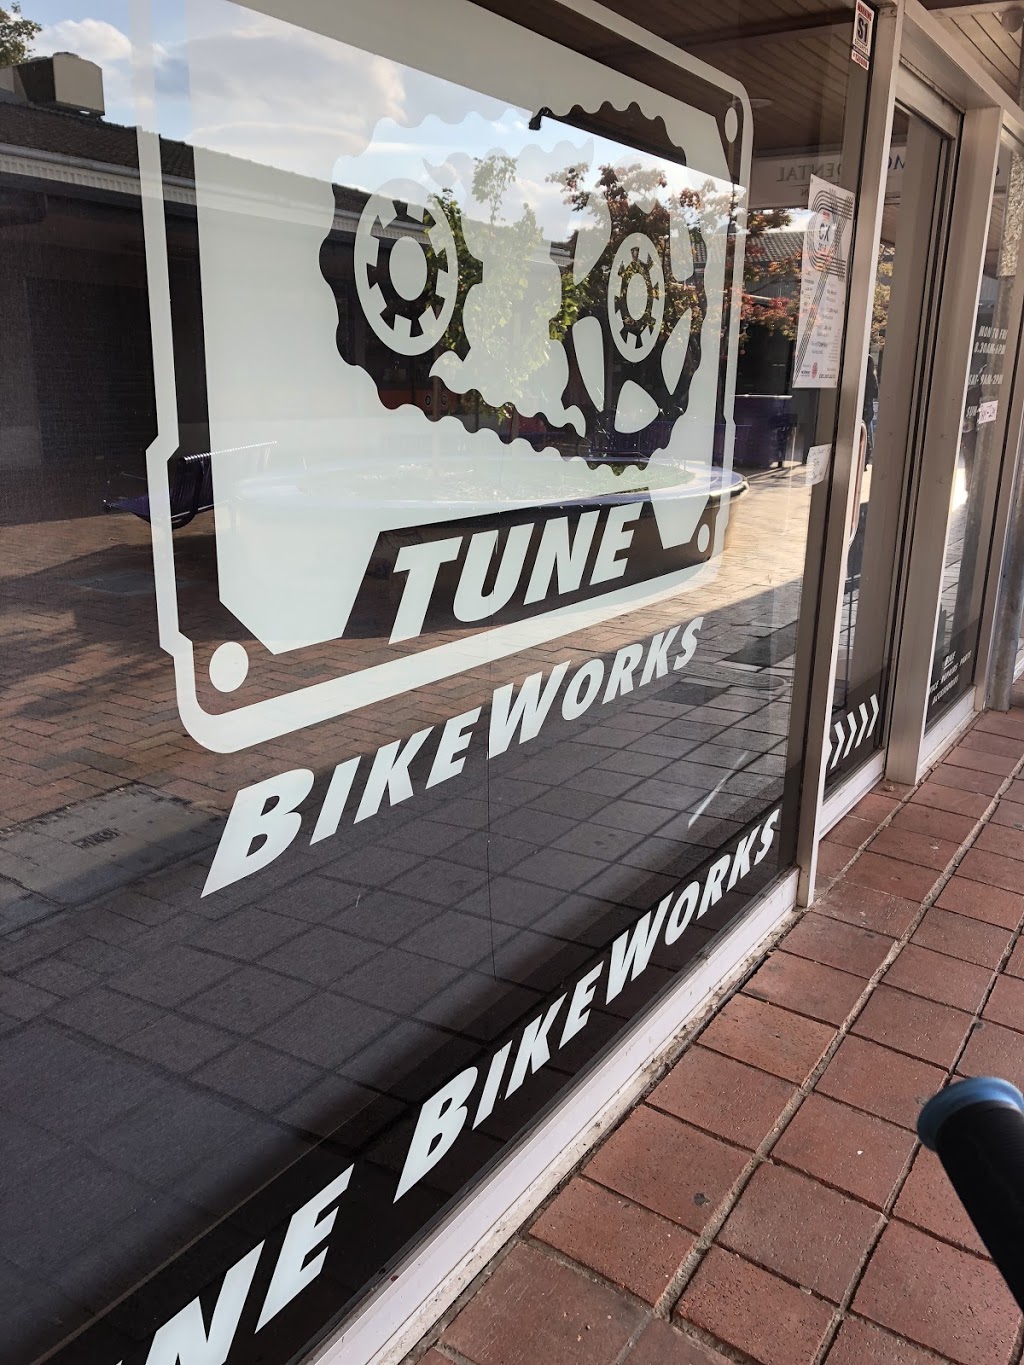 Tune Bike Works | bicycle store | Shop 2/4 Dickson Pl, Dickson ACT 2602, Australia | 0402921318 OR +61 402 921 318